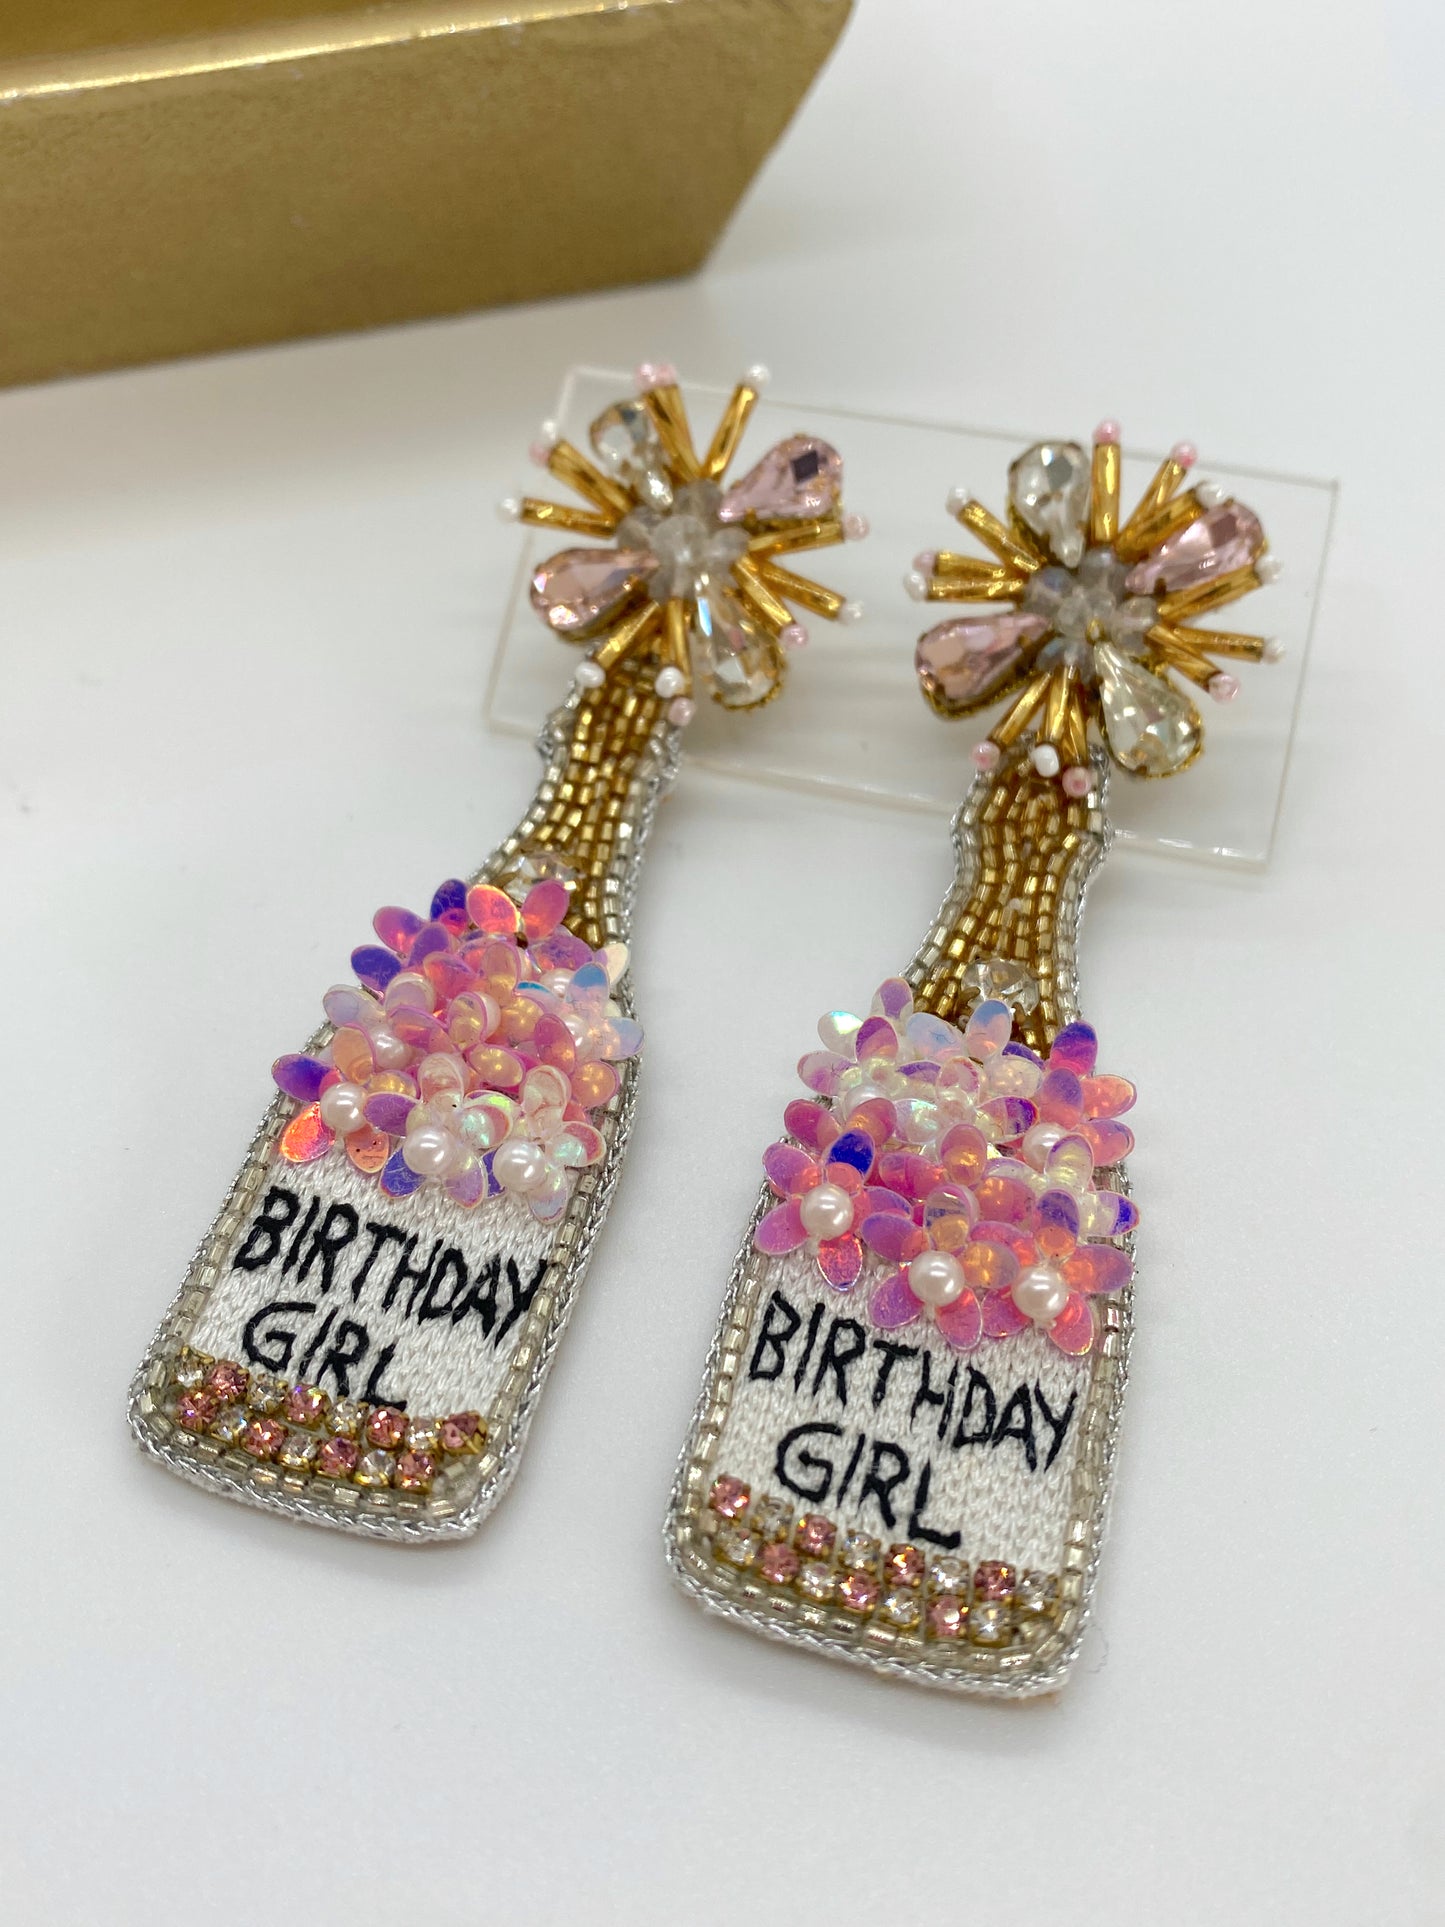 The Birthday Girl Earrings